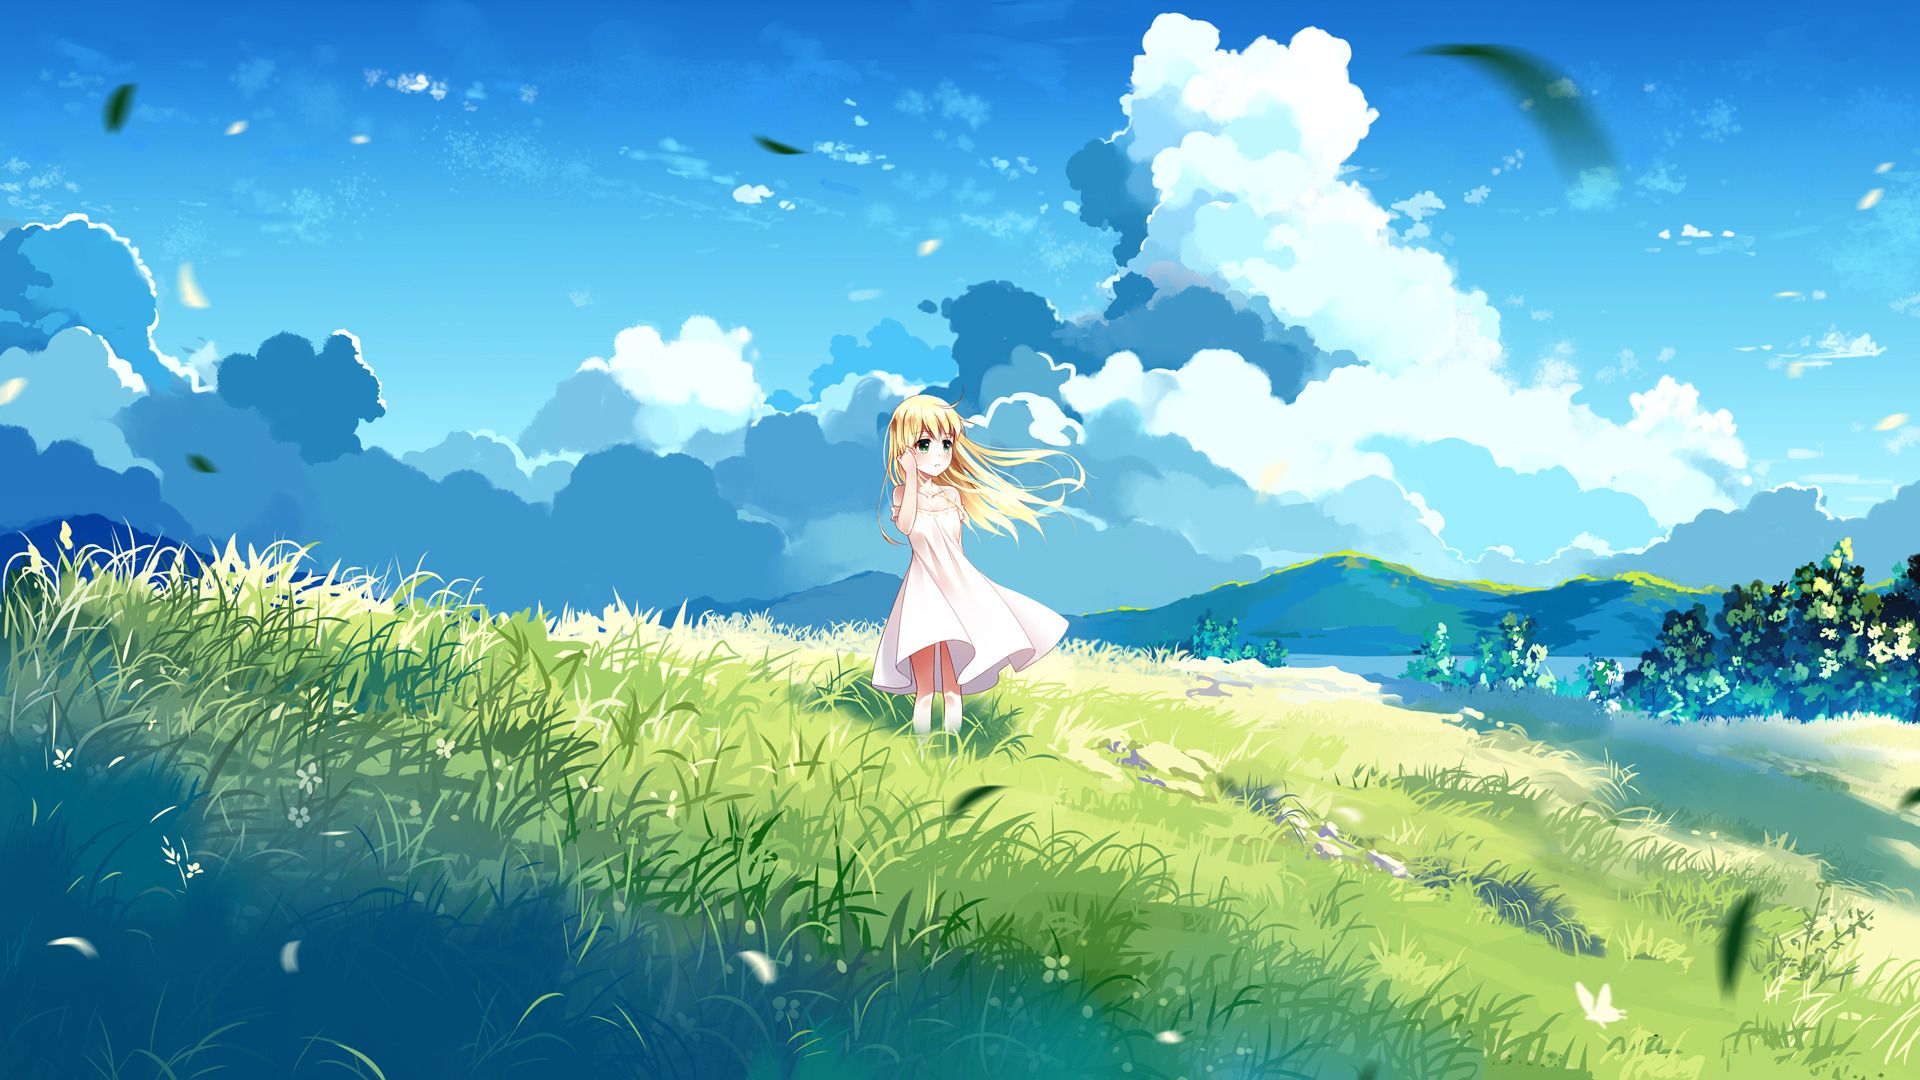 Anime Wallpaper HD: Anime Scenery Wallpaper With Girl